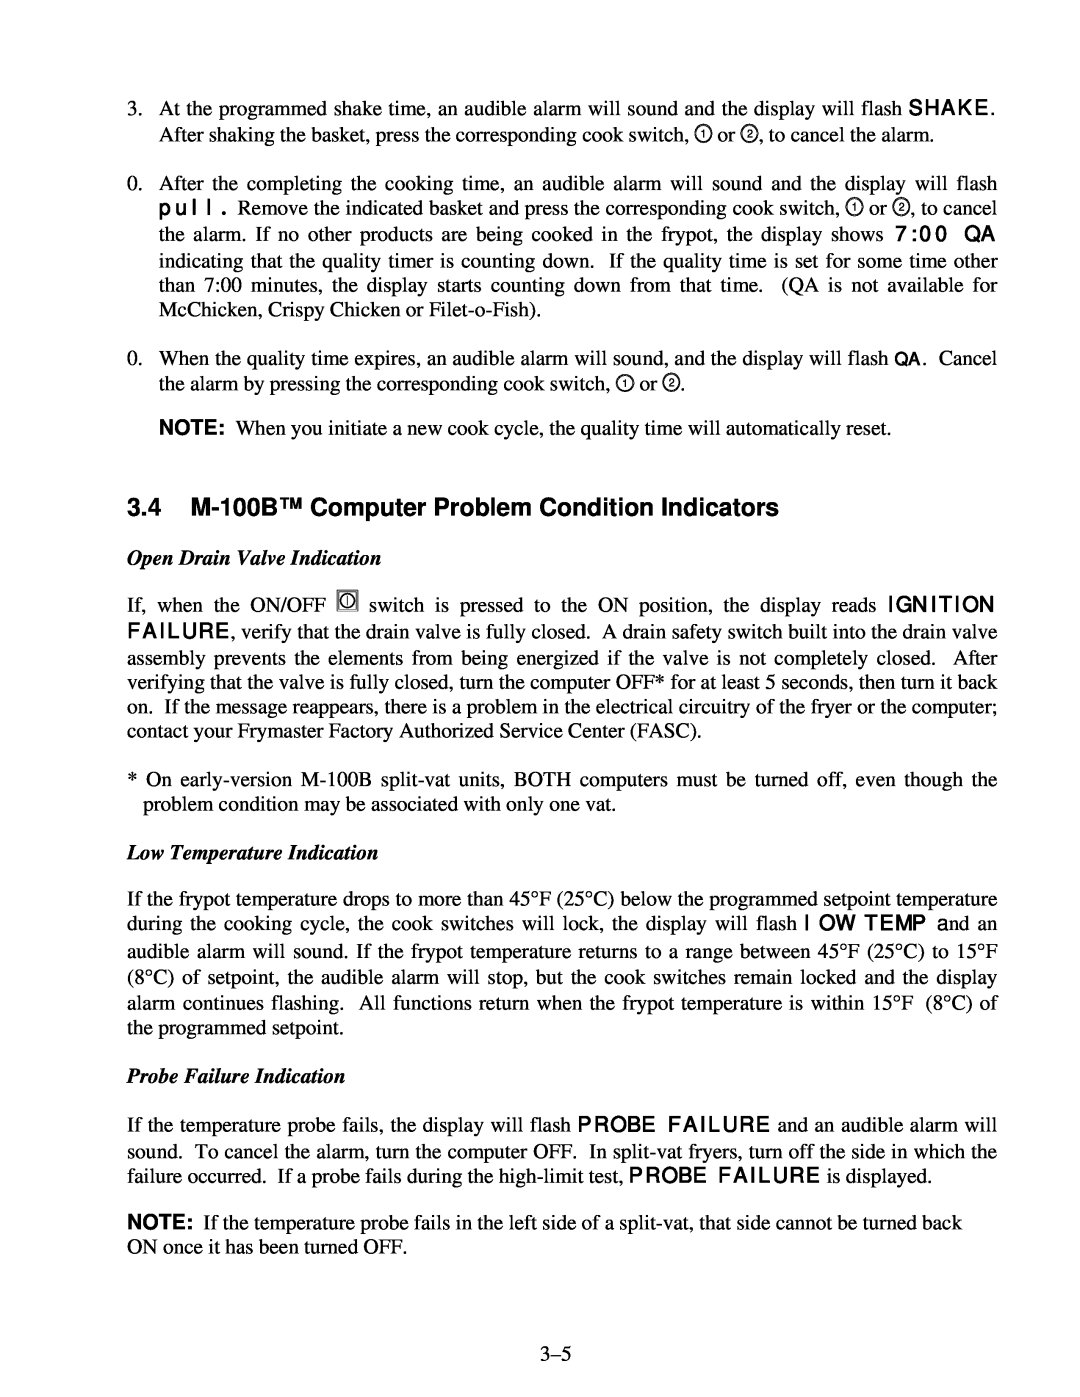 Frymaster H14 Series service manual 3.4 M-100B Computer Problem Condition Indicators, Open Drain Valve Indication 